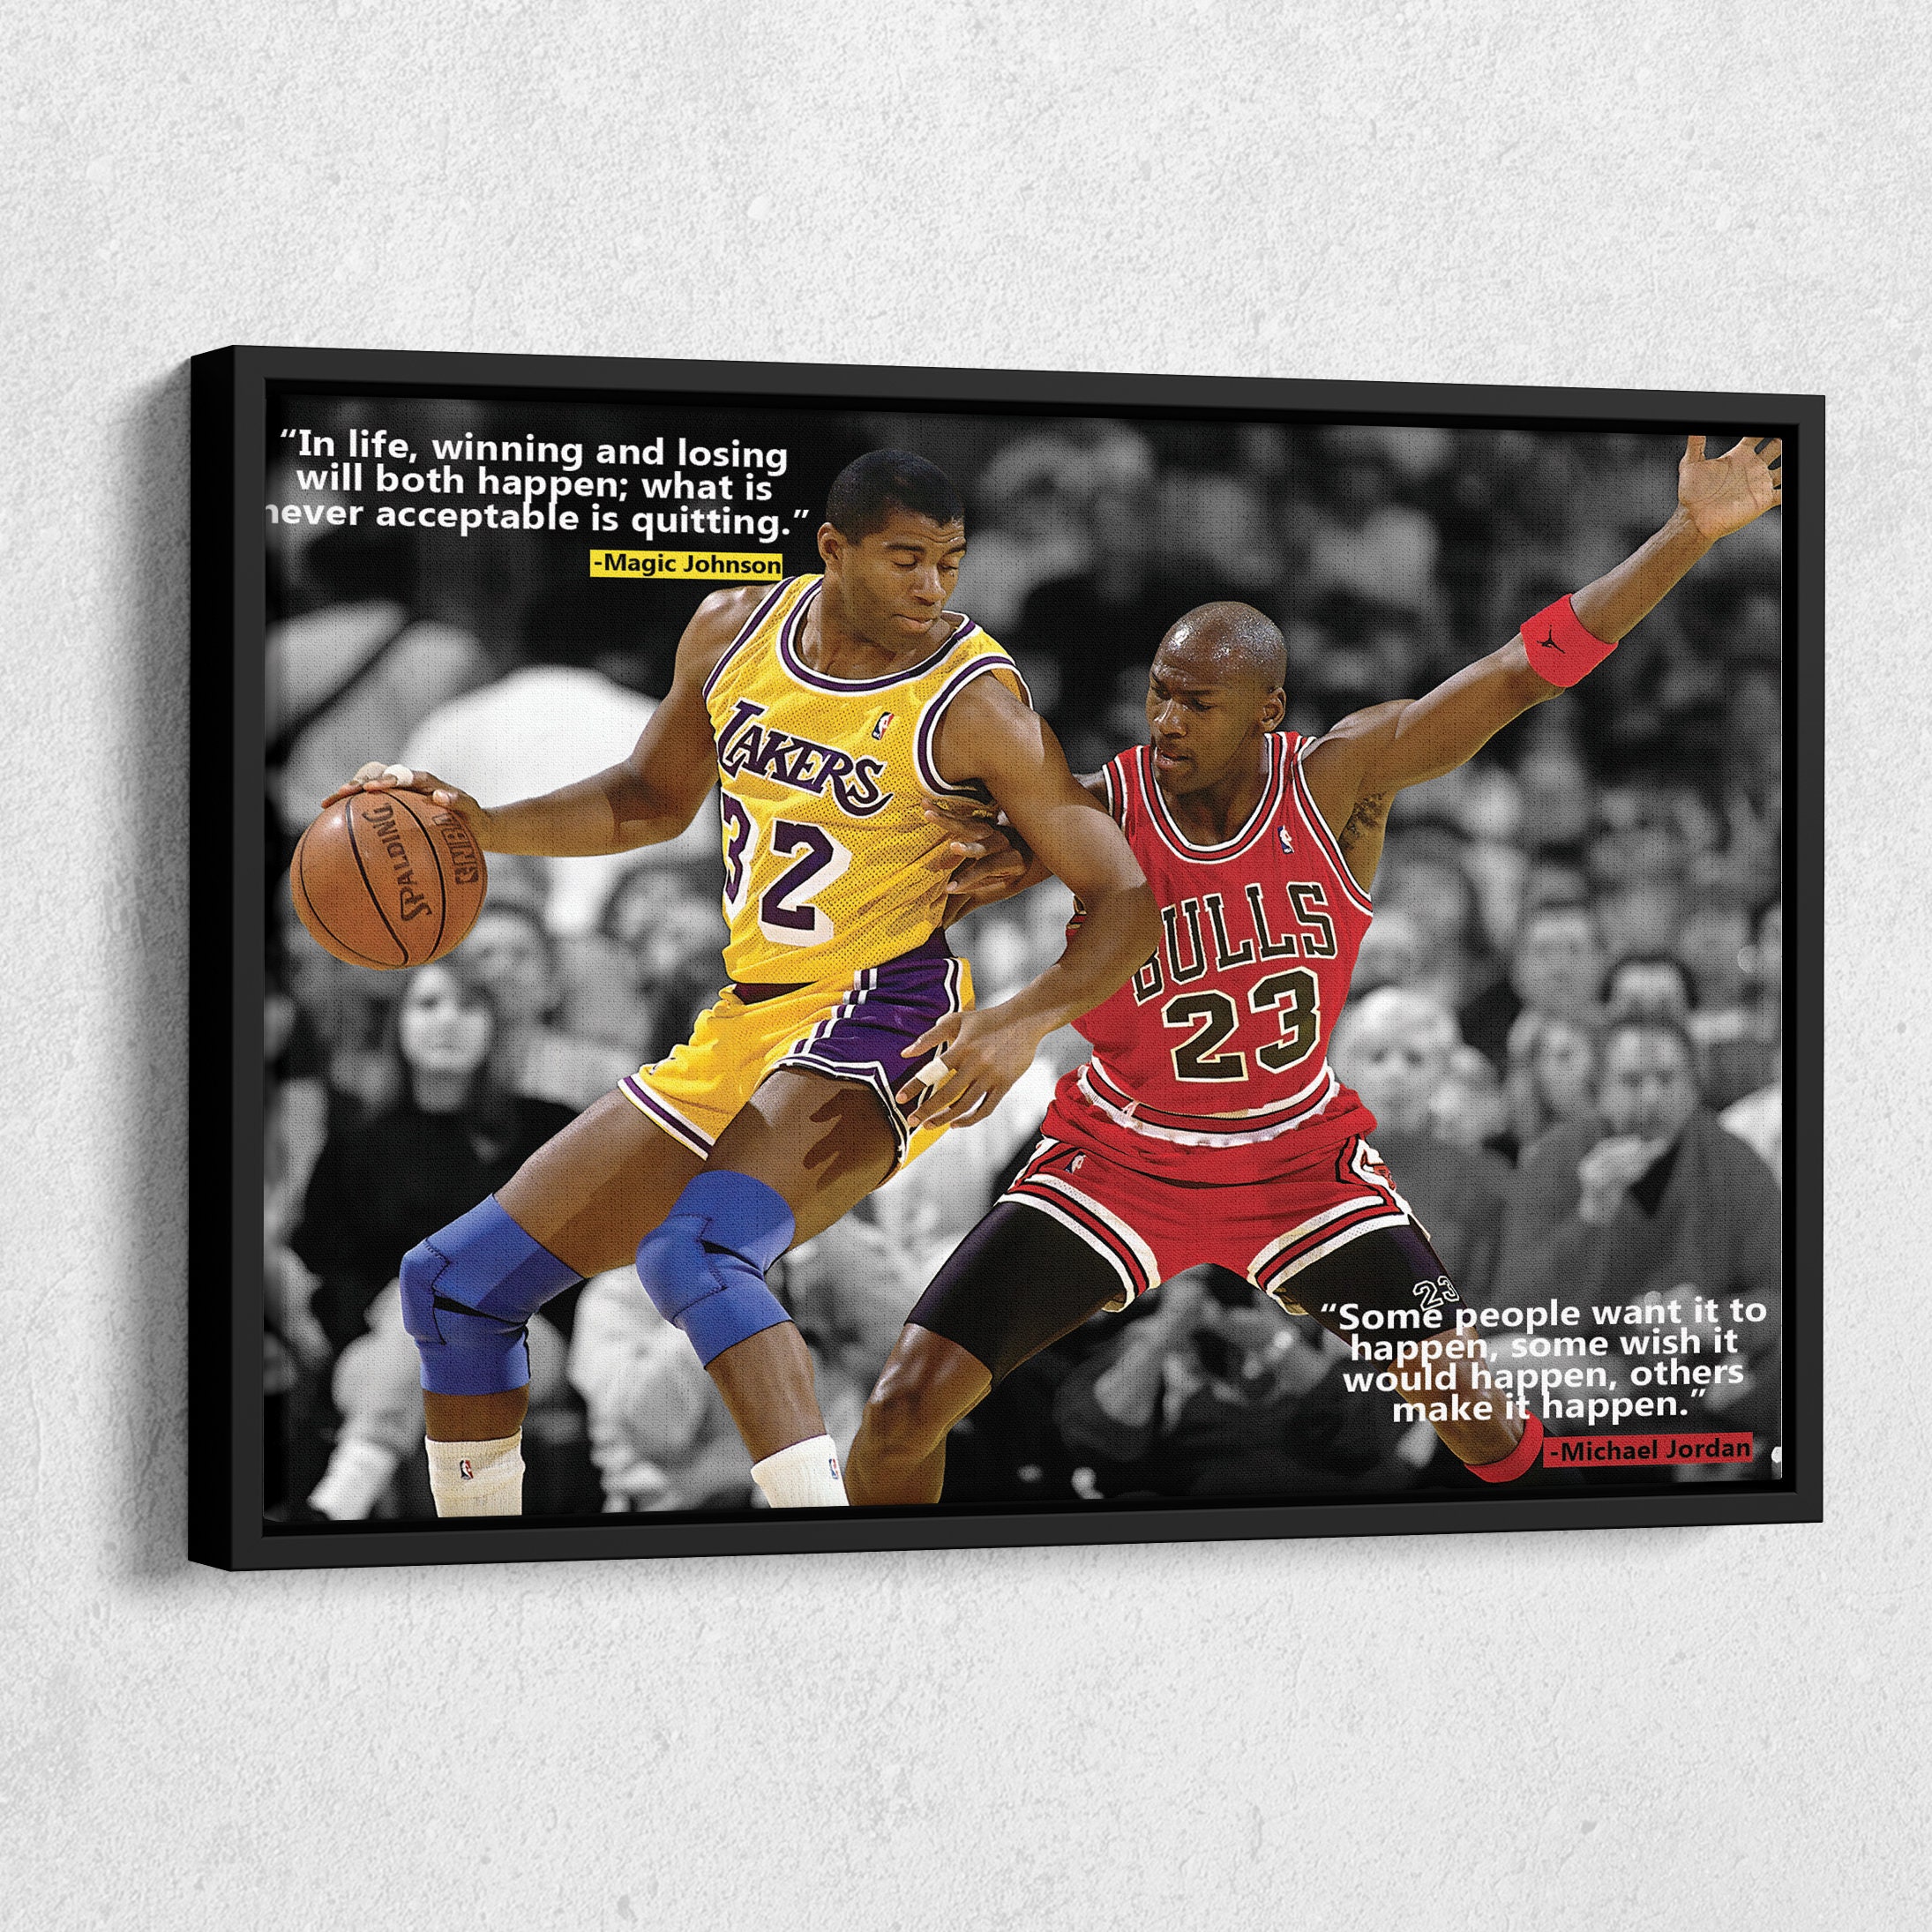 Magic Johnson #32 of the Los Angeles Lakers and Michael Jordan #23